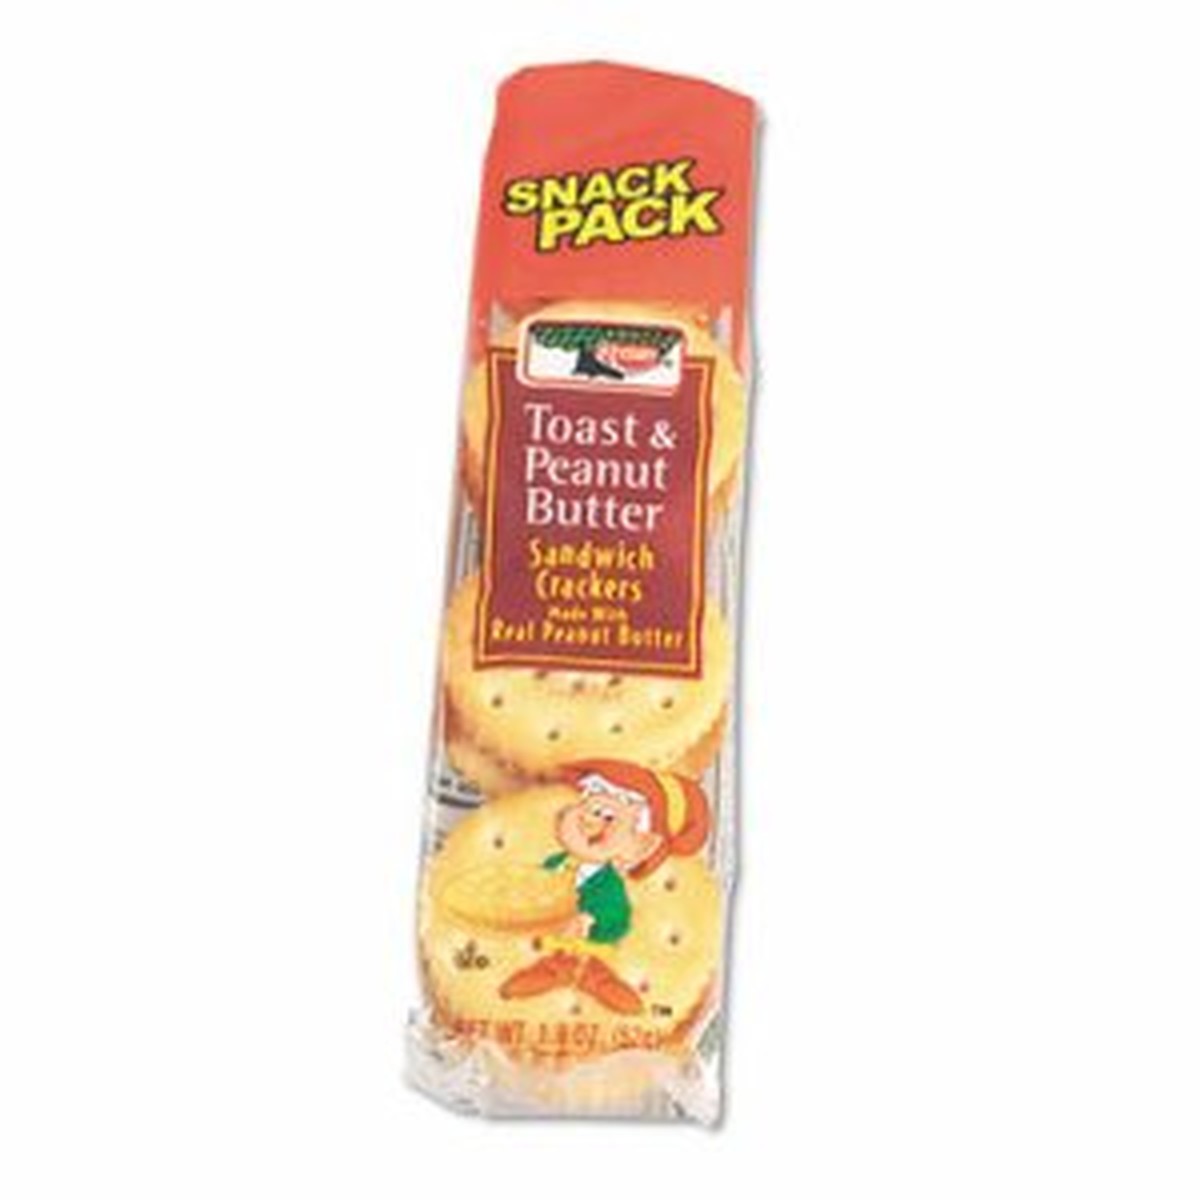 Sandwich Crackers, Toast & Peanut Butter, 8 Cracker Snack Pack, 12/Box